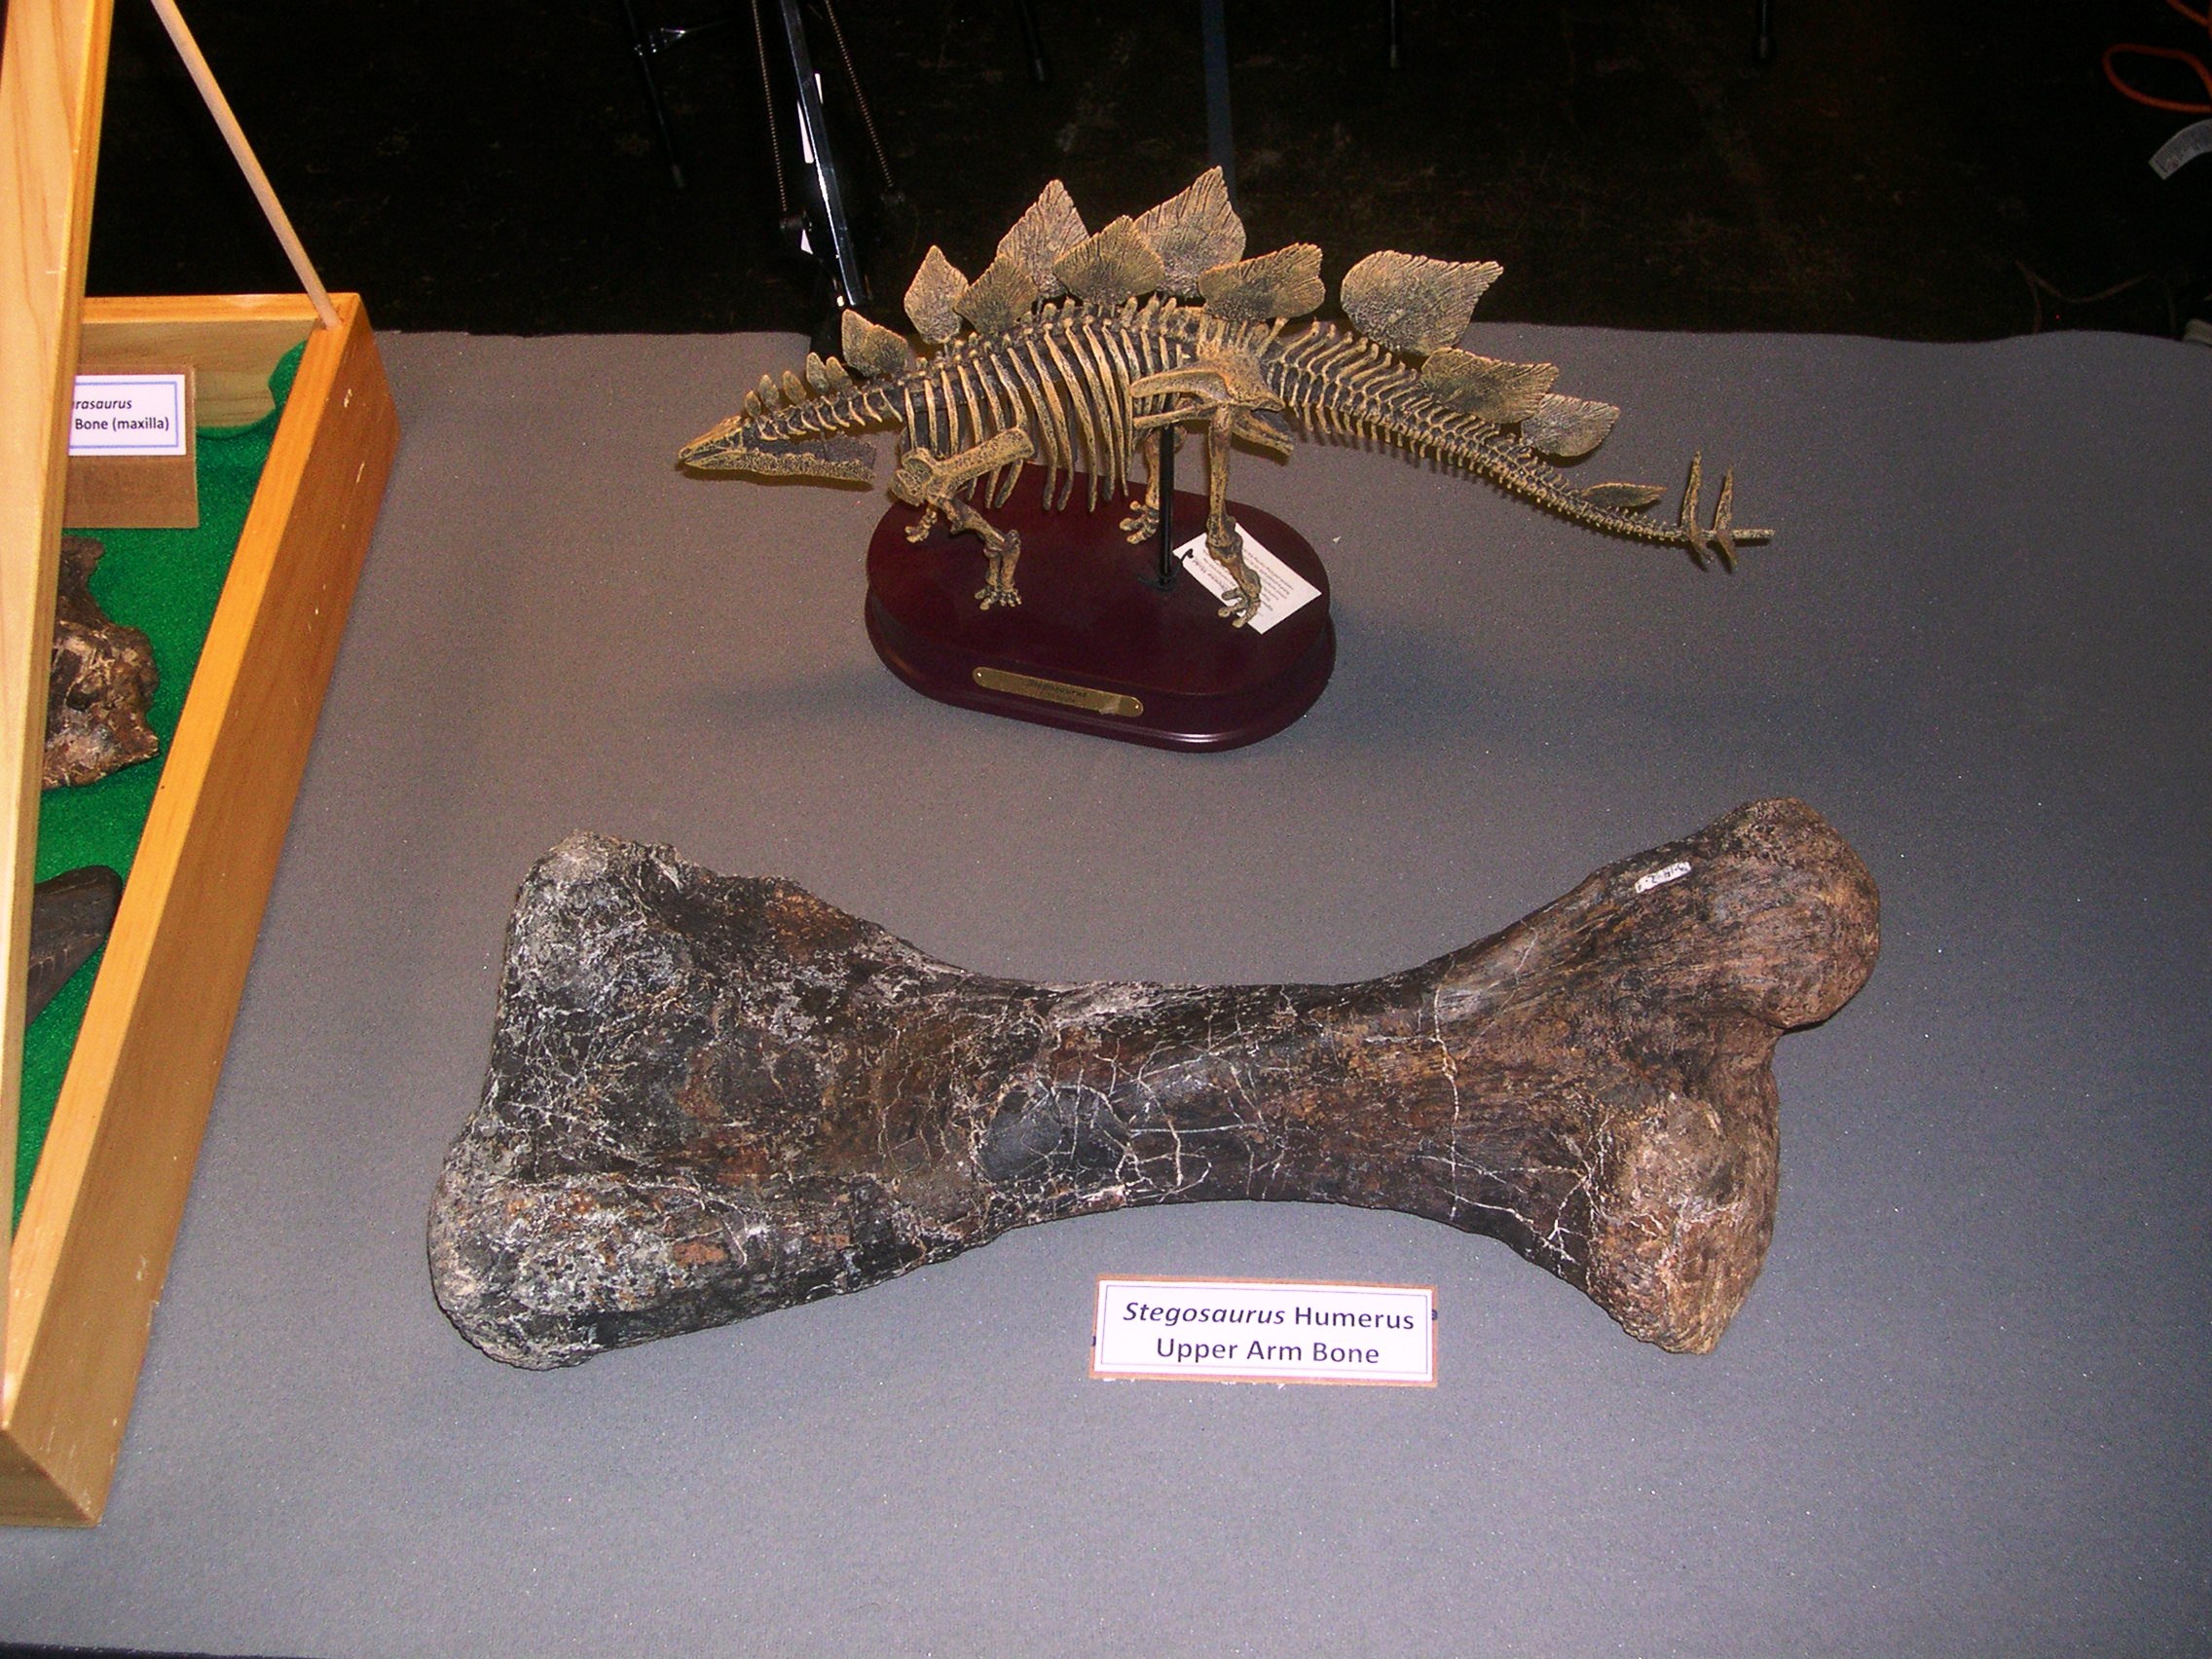 Stegosaurus humerus